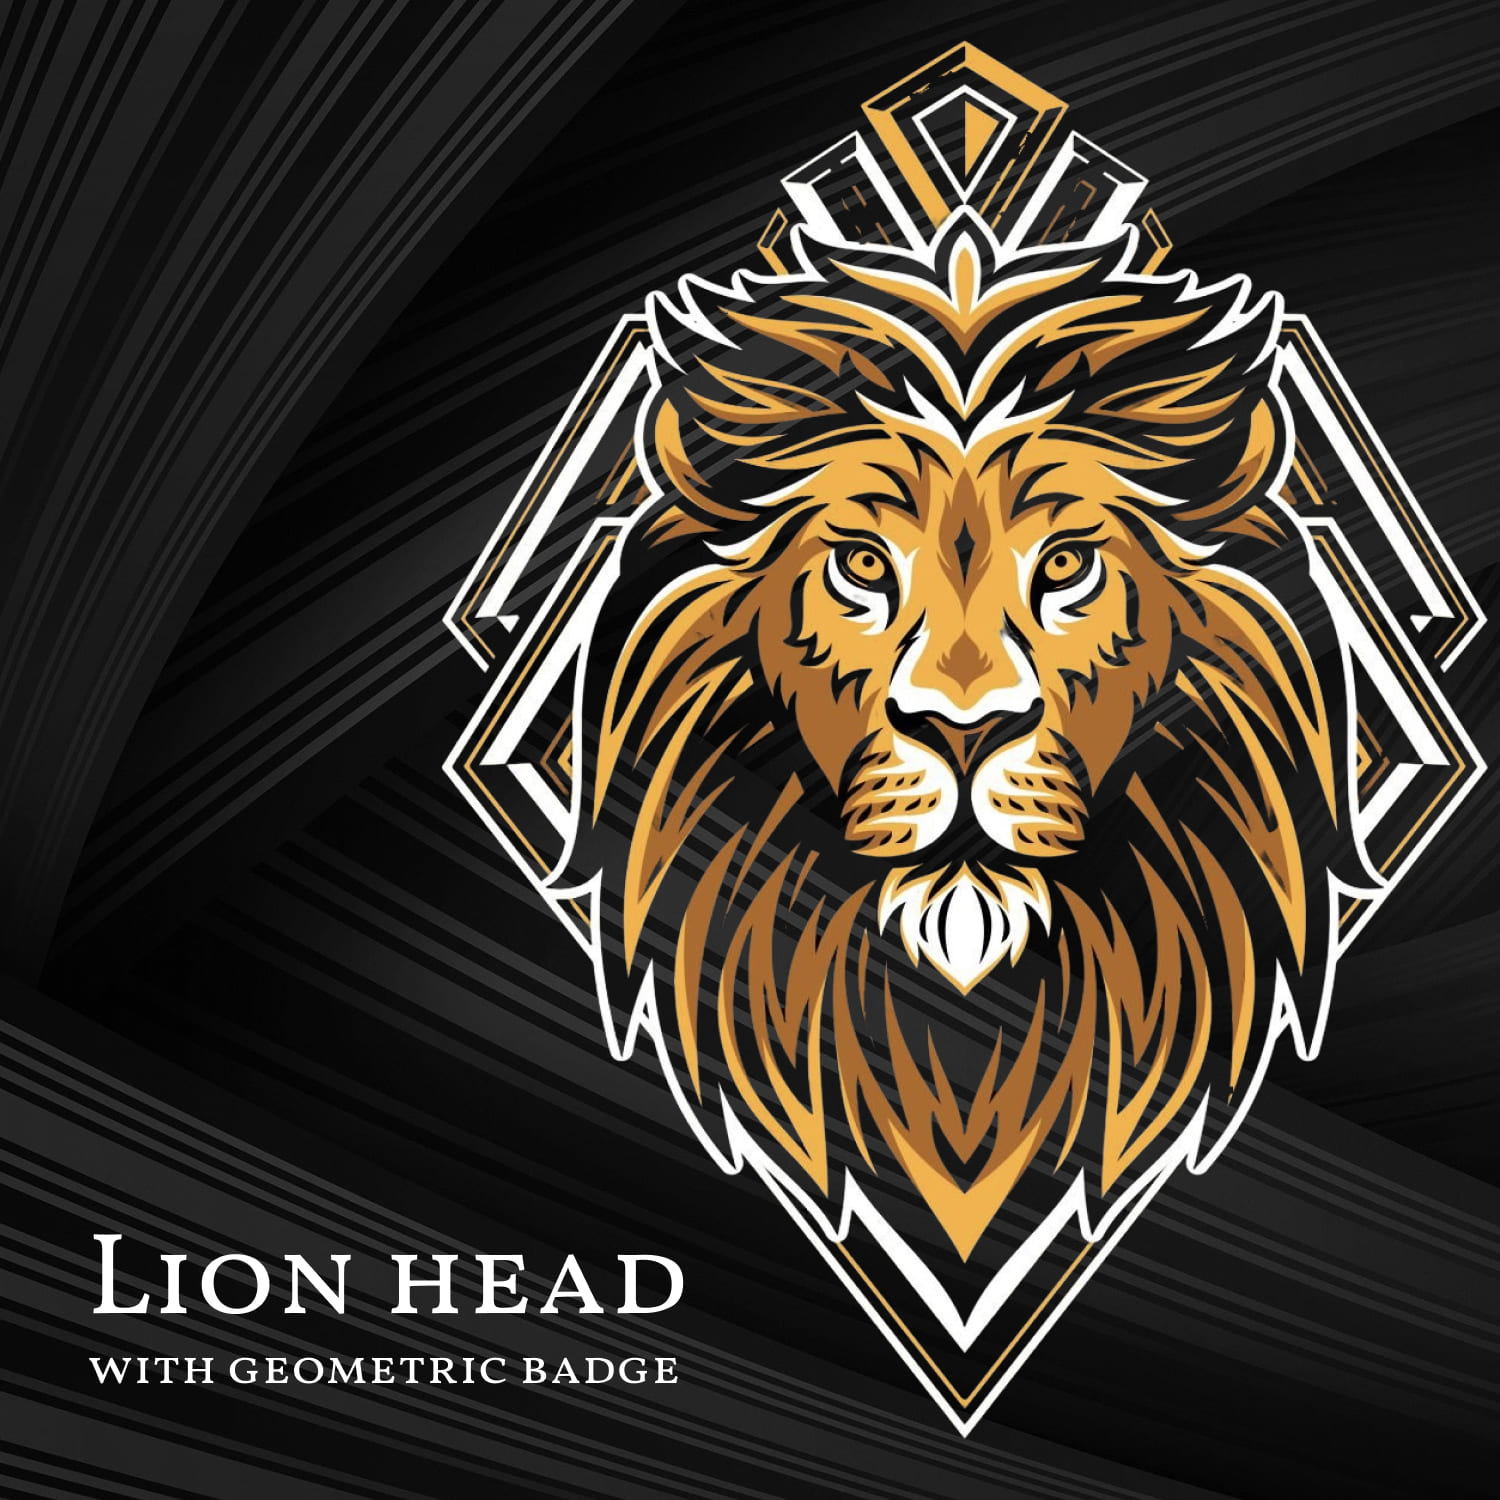 Lion Head with Geometric Badge.